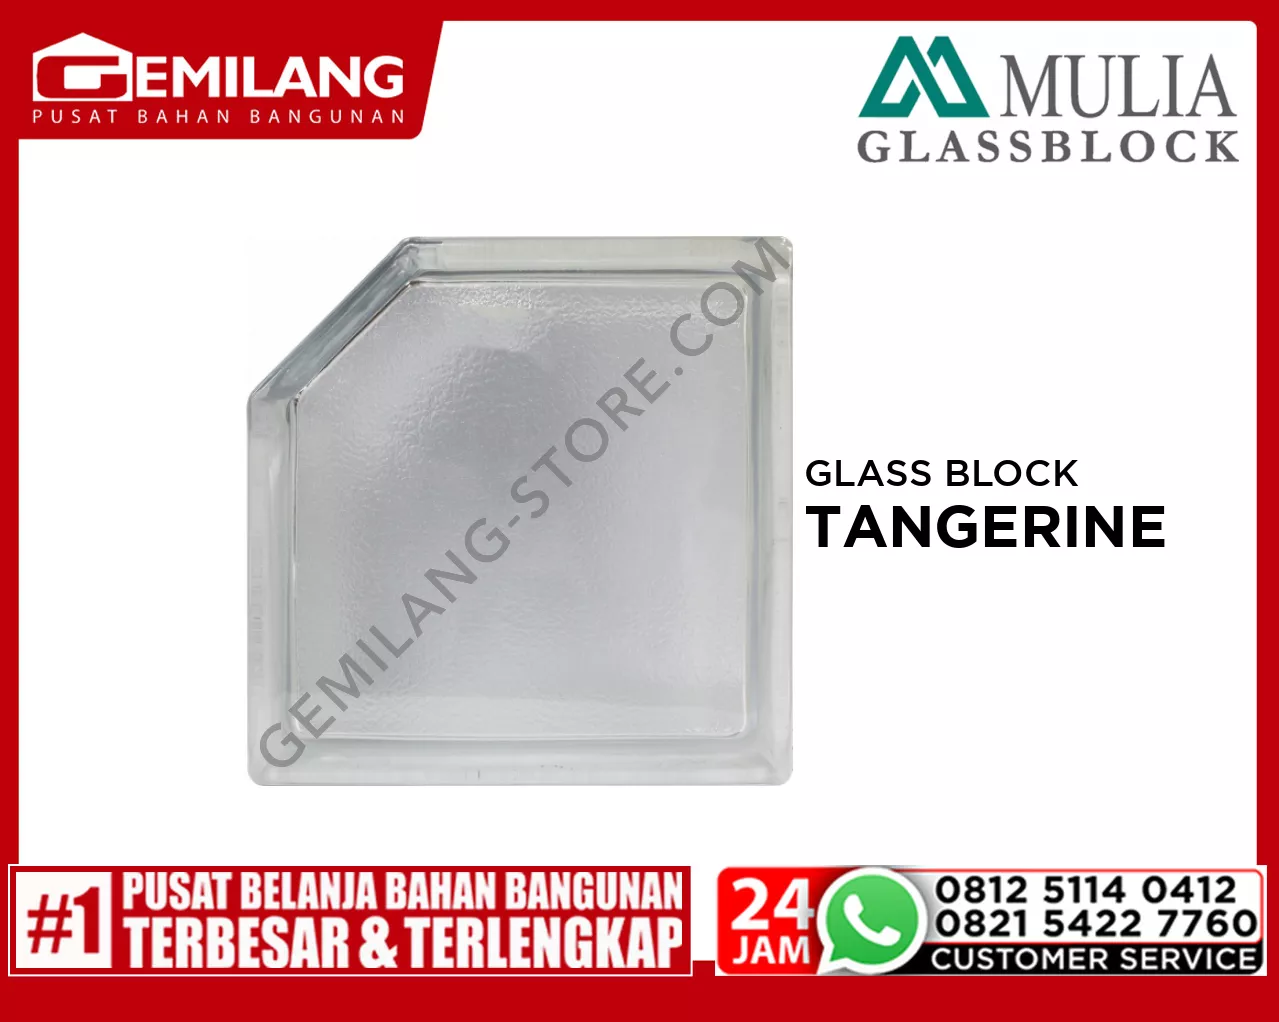 MULIA GLASS BLOCK TANGERINE ROASTER 20 x 20